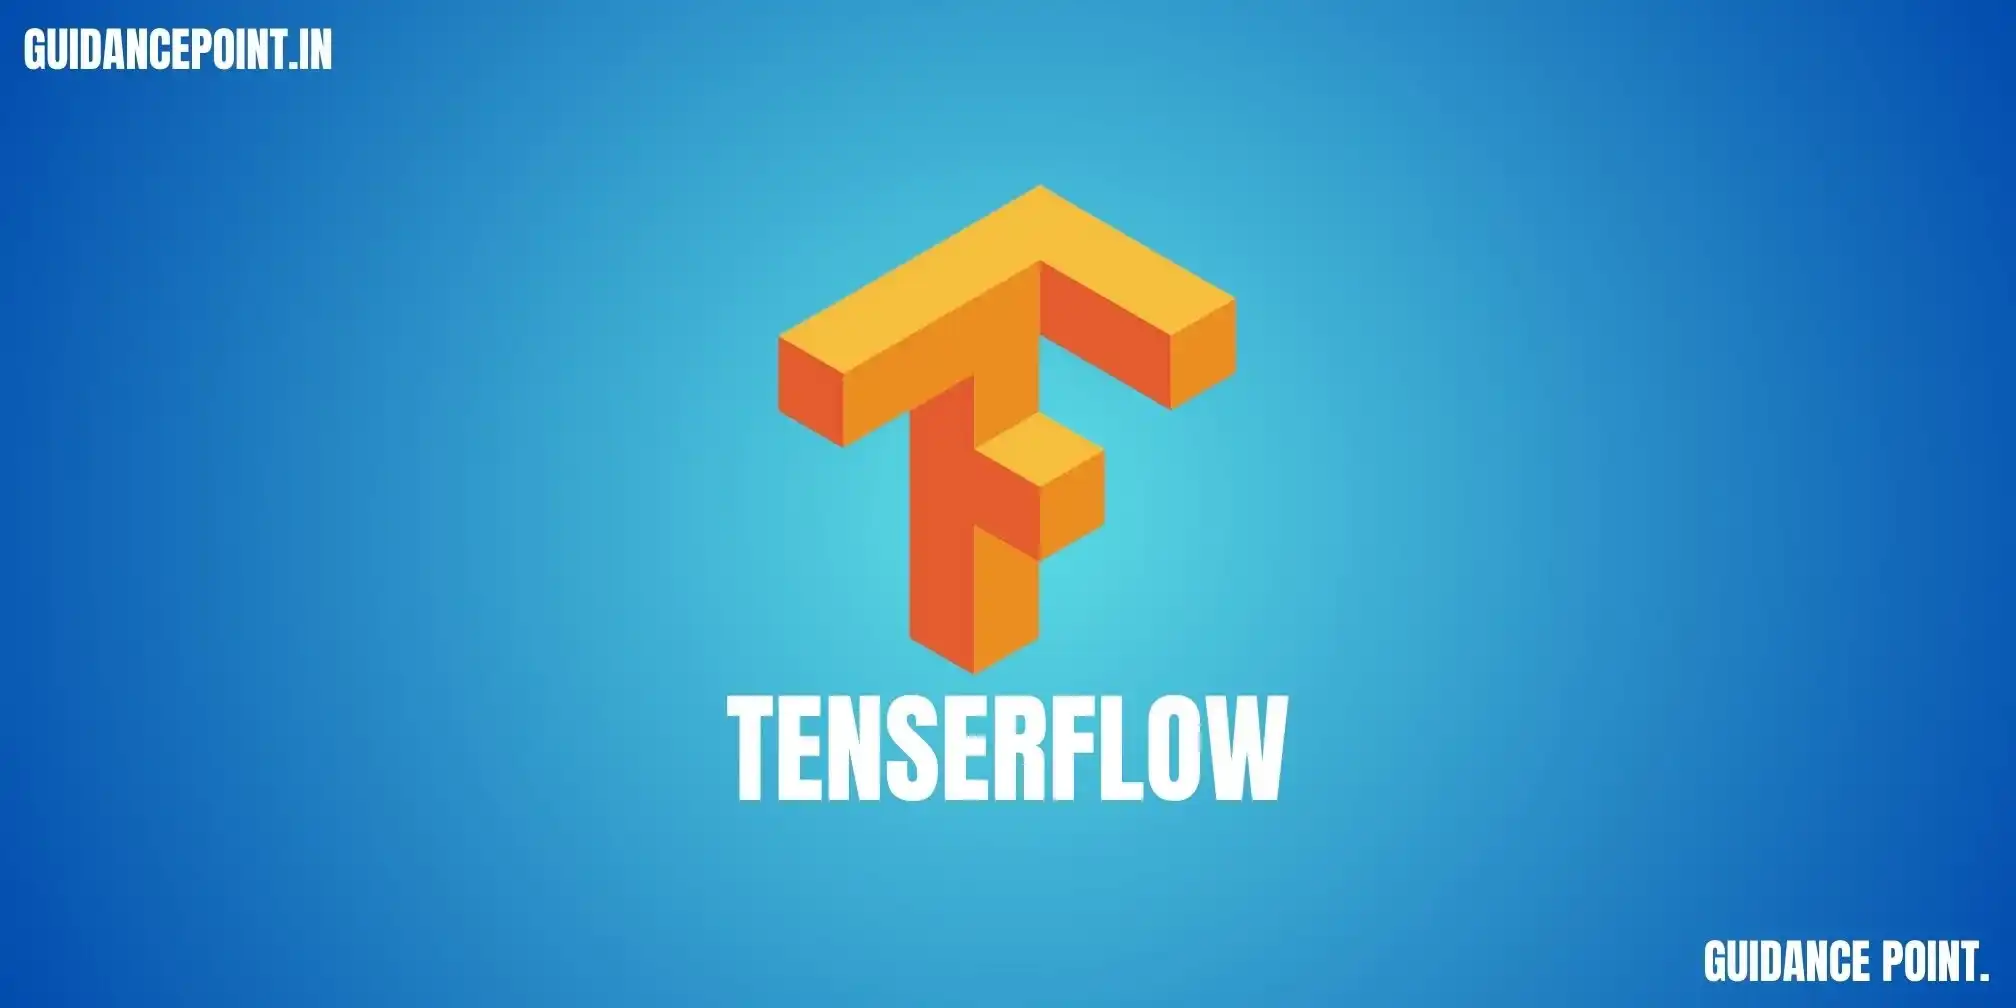 Tenserflow Course in Pune